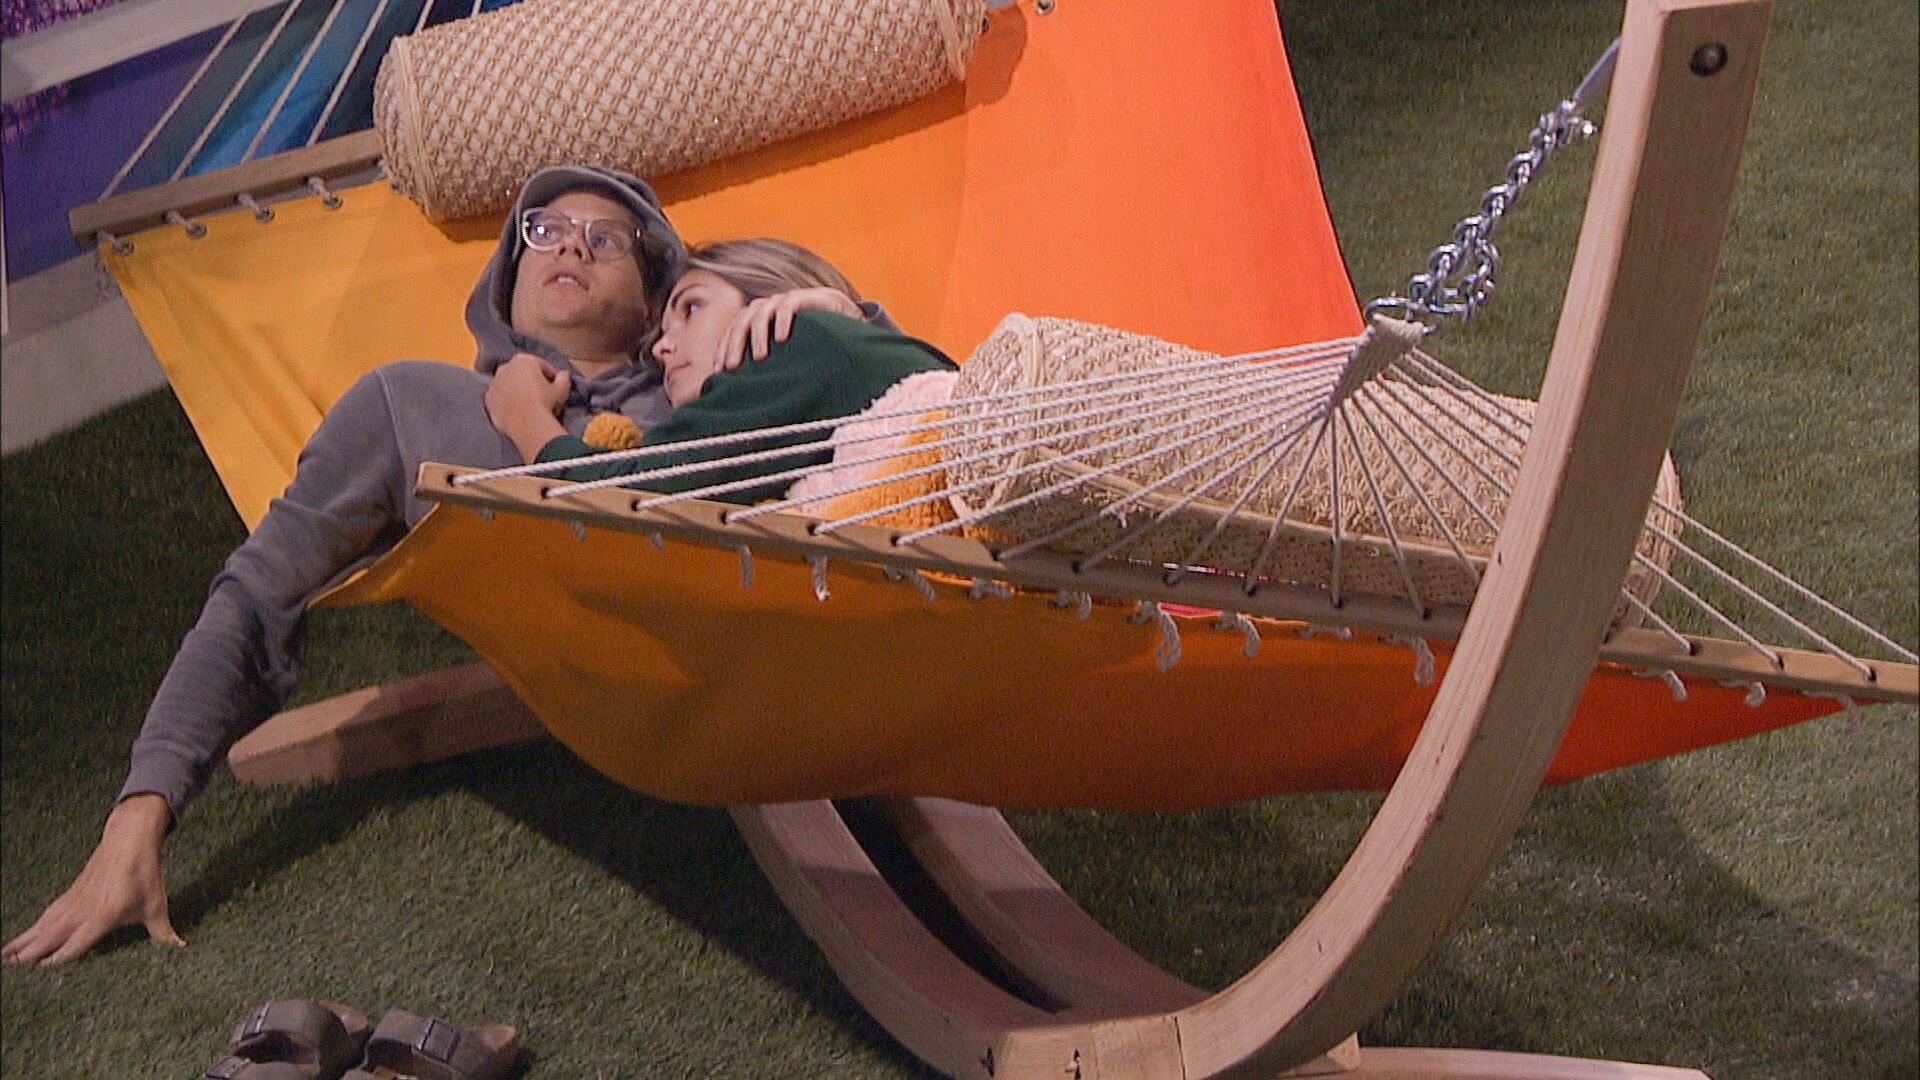 Alyssa Snider and Kyle Capener cuddling in a hammock during 'Big Brother 24'